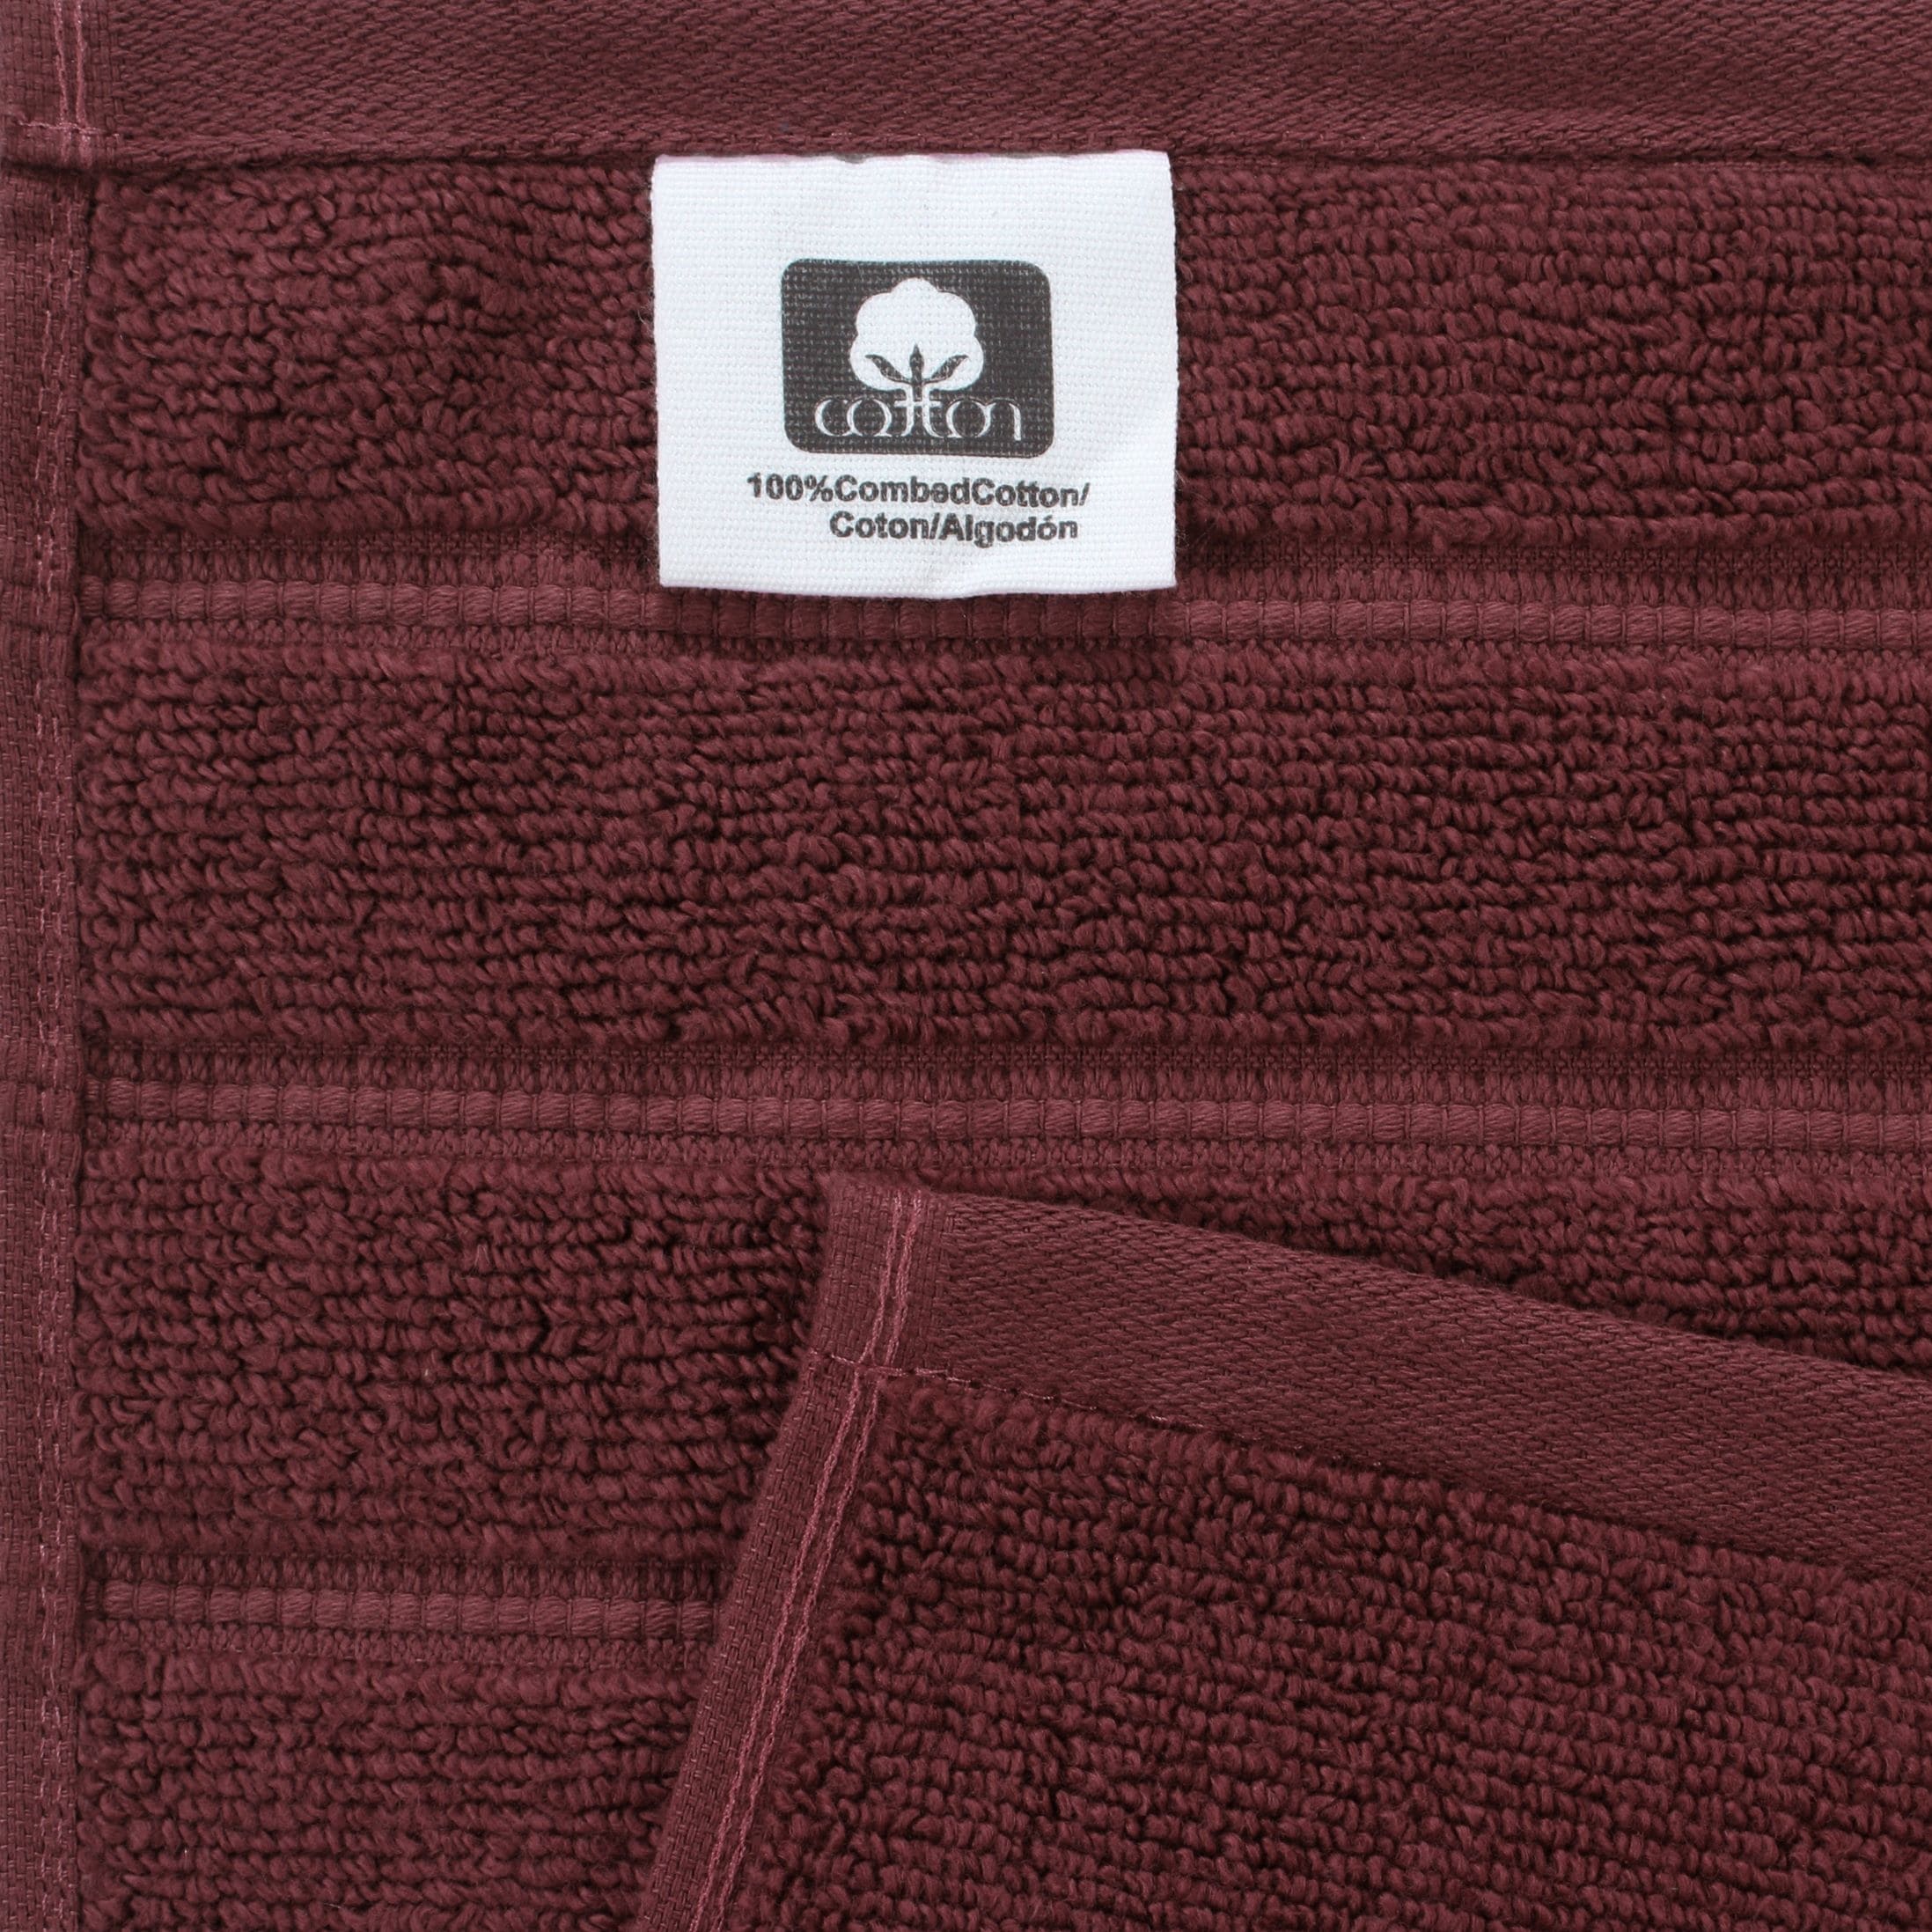 6-Piece Bibb Home 100% Egyptian Cotton Towel Set